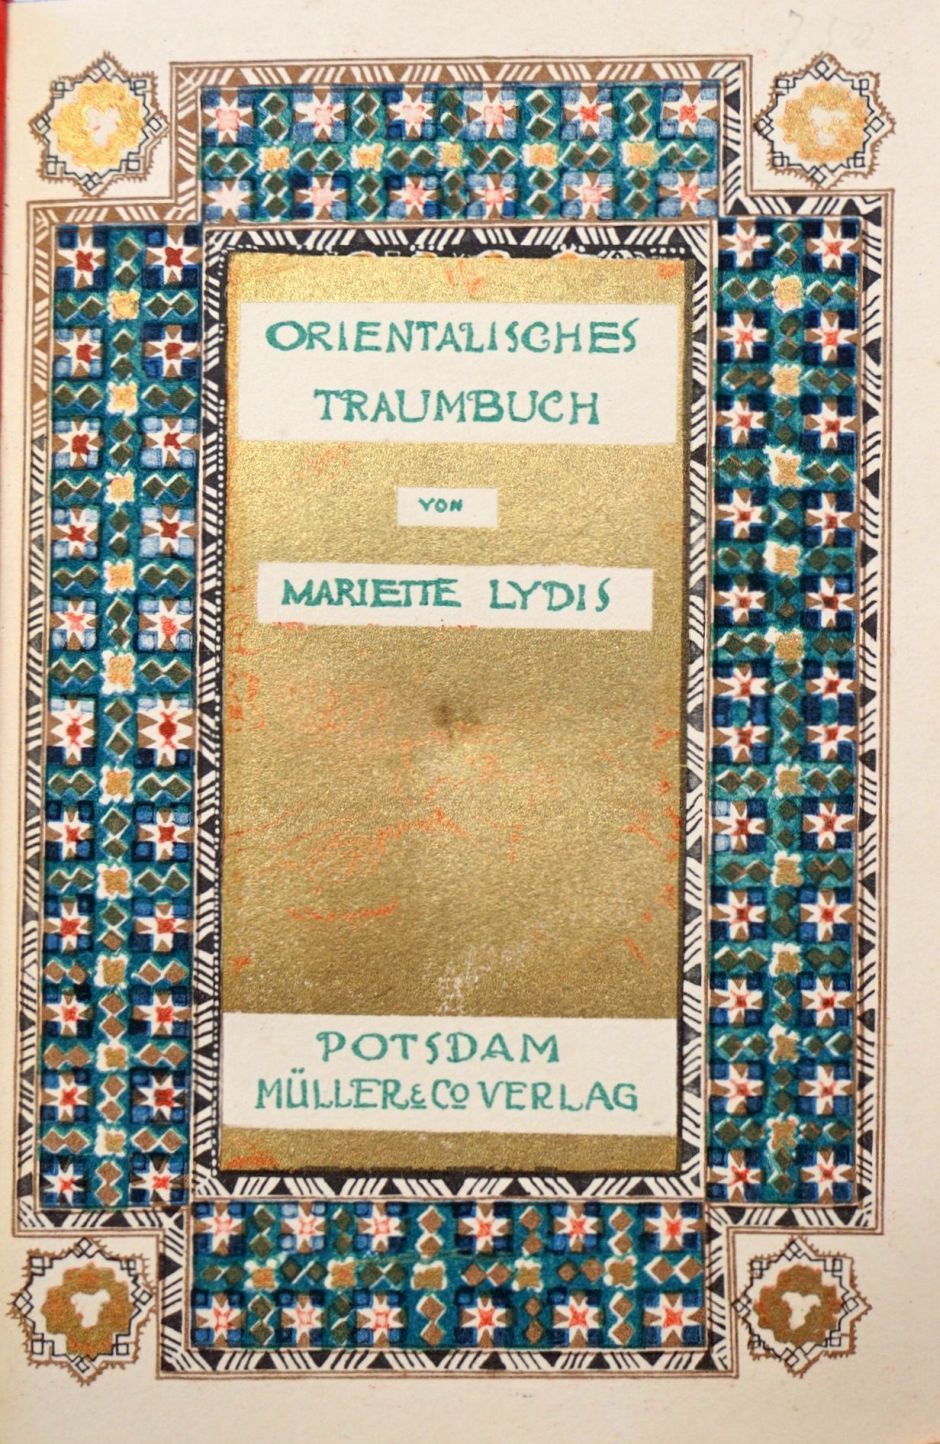 Lot 3291, Auction  115, Lydis, Mariette, Orientalisches Traumbuch